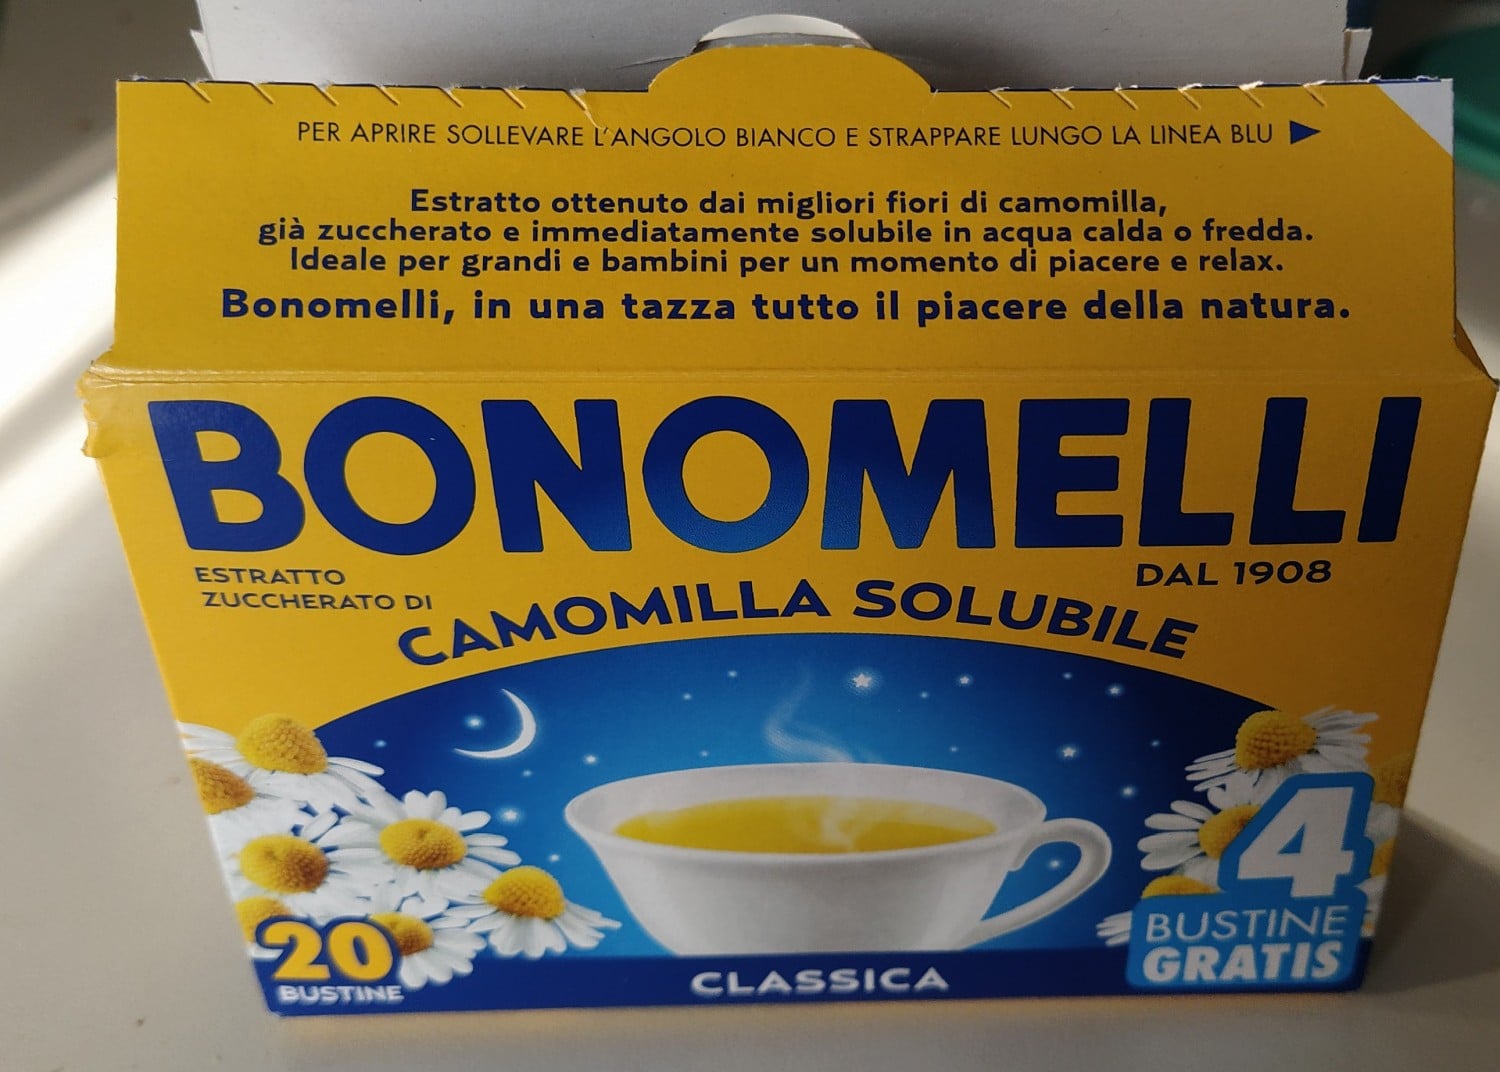 BONOMELLI Camomilla Solubile, 20 bustine - Tè e Tisane